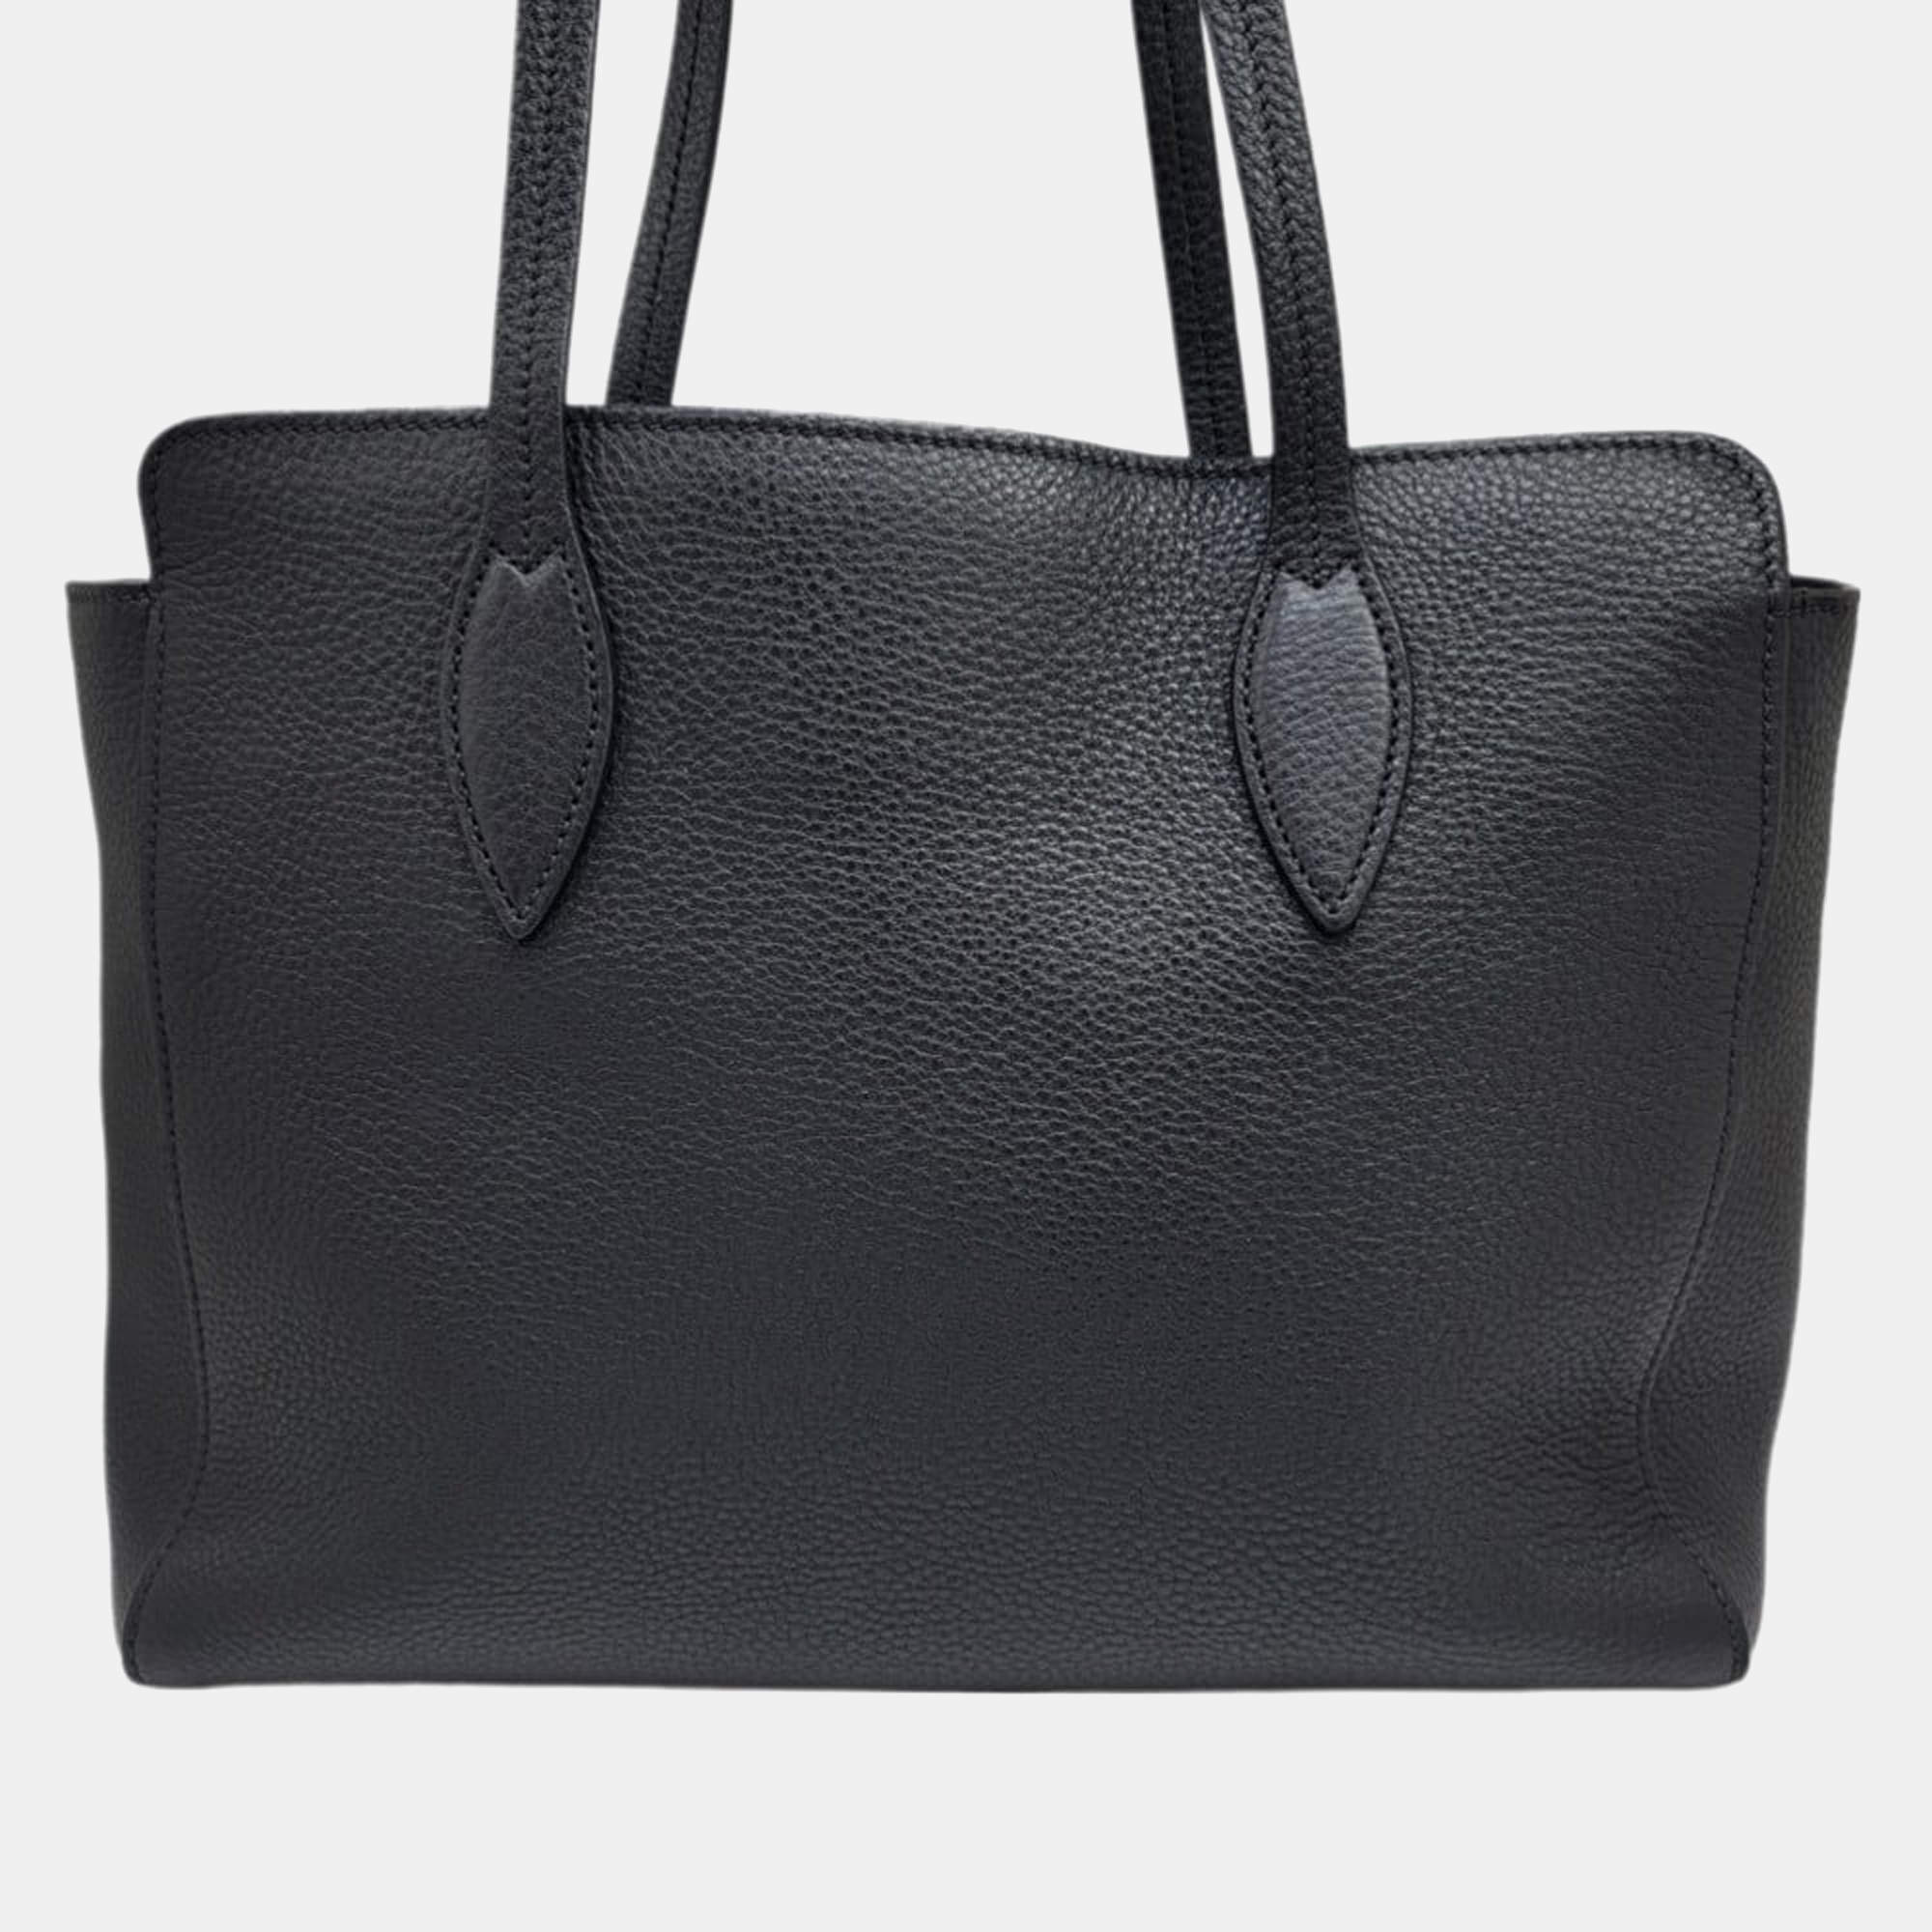 Prada Black Leather Vitello Phenix Tote Bag Prada